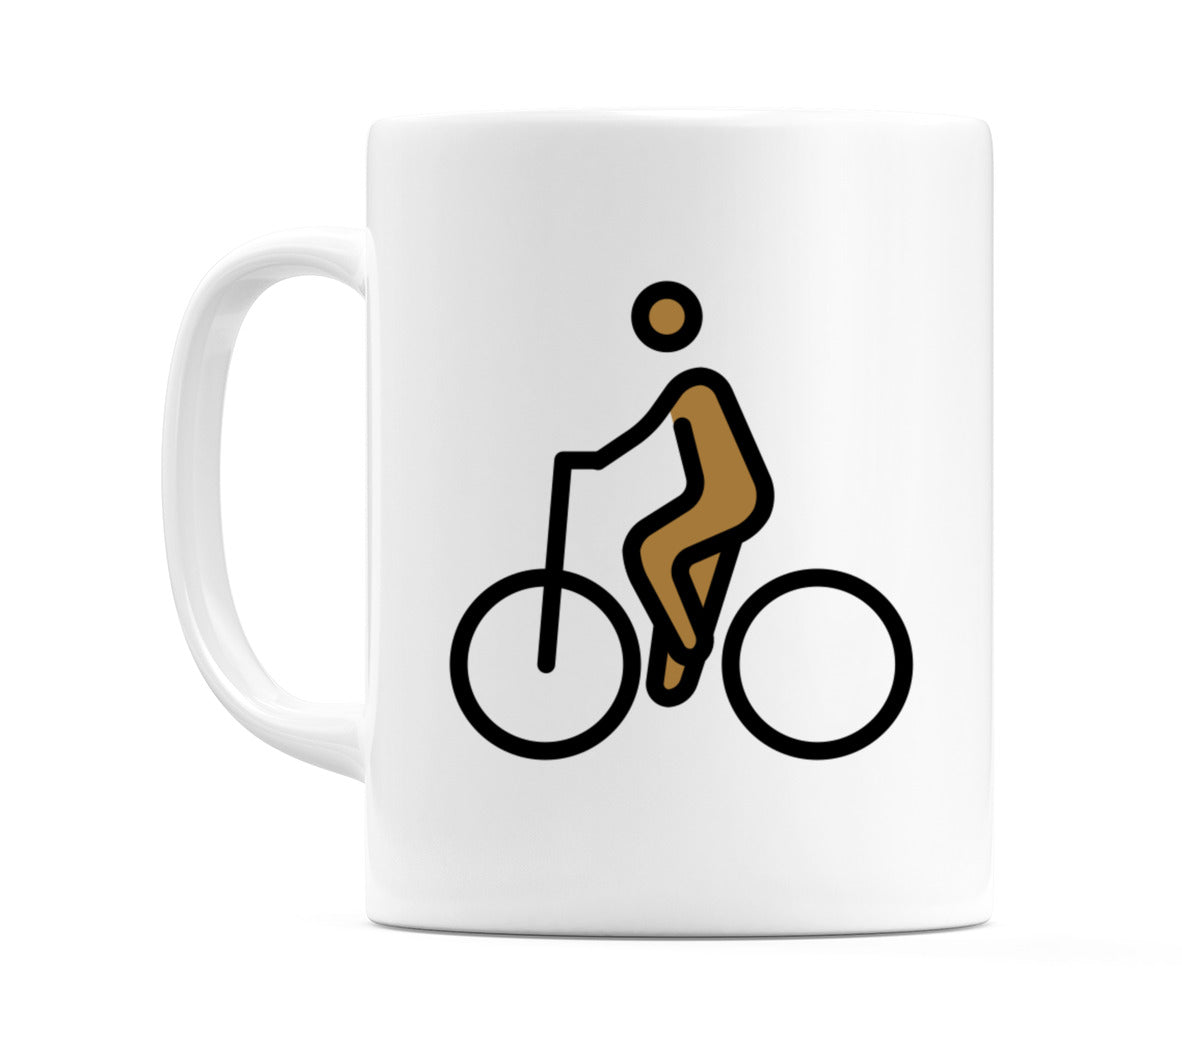 Male Biking: Medium-Dark Skin Tone Emoji Mug